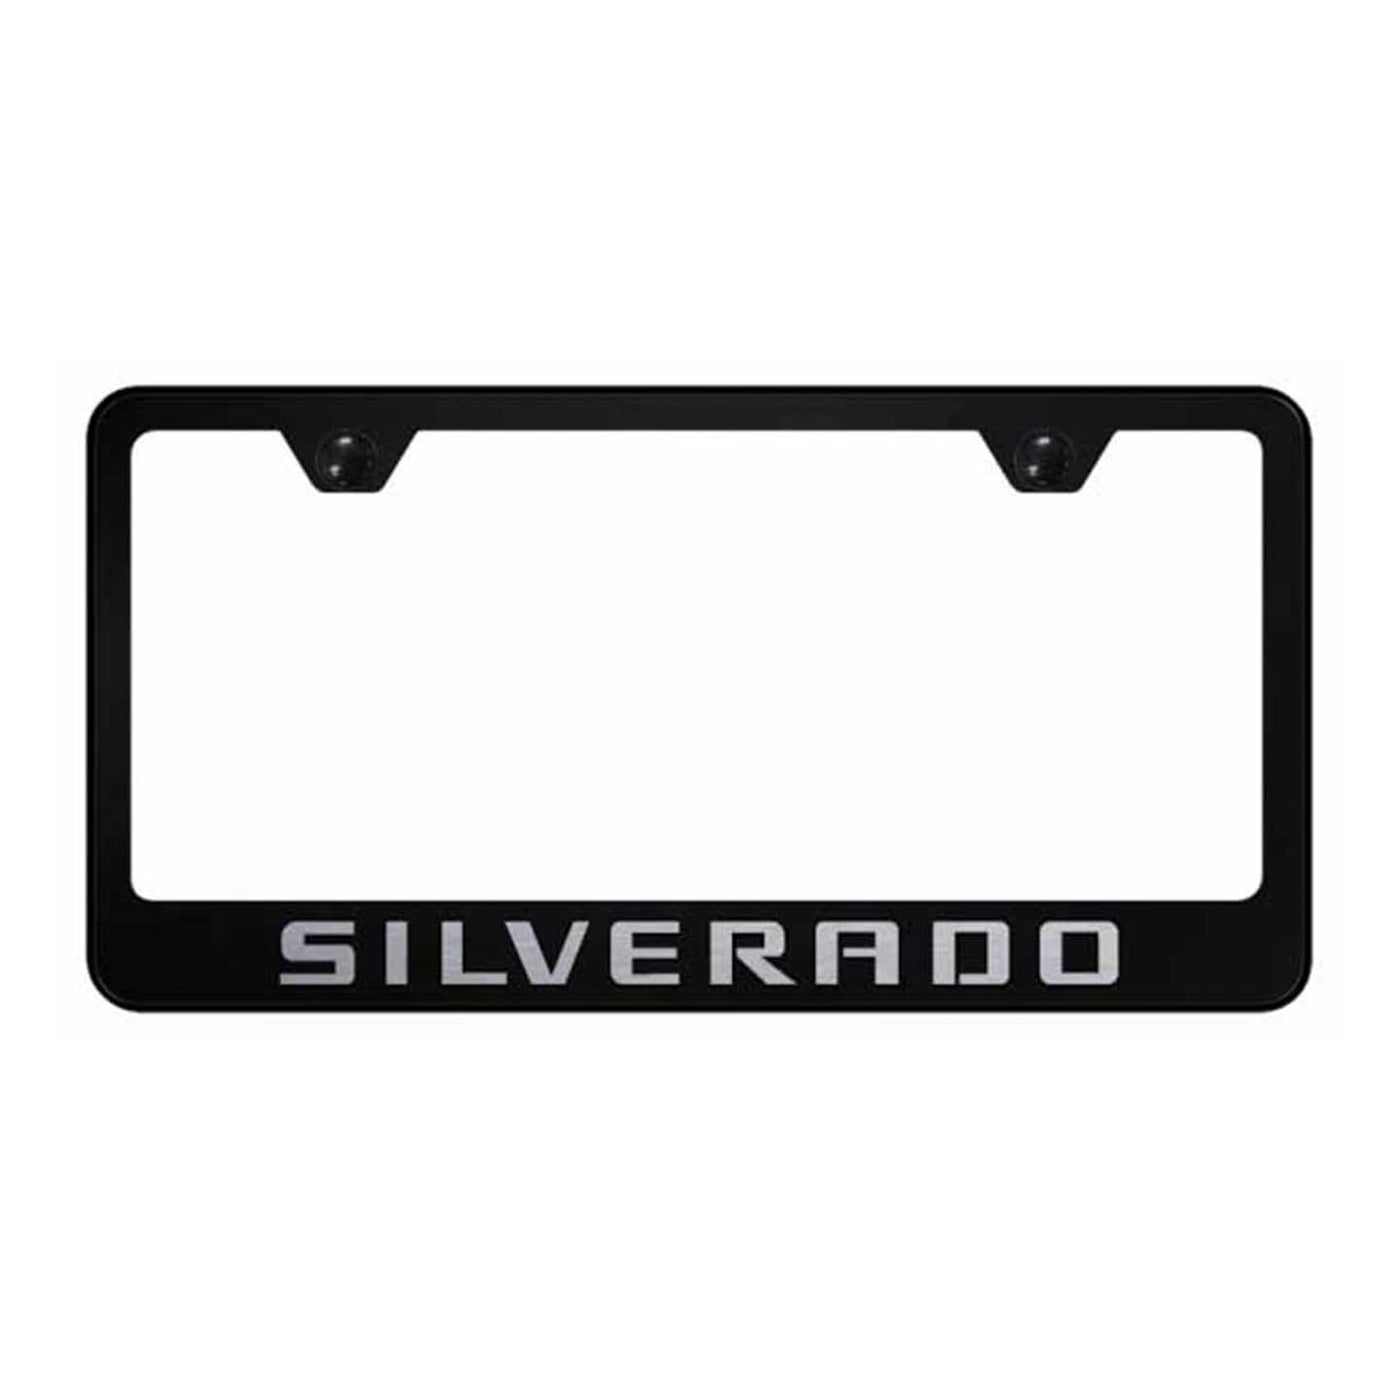 Silverado Stainless Steel Frame - Laser Etched Black